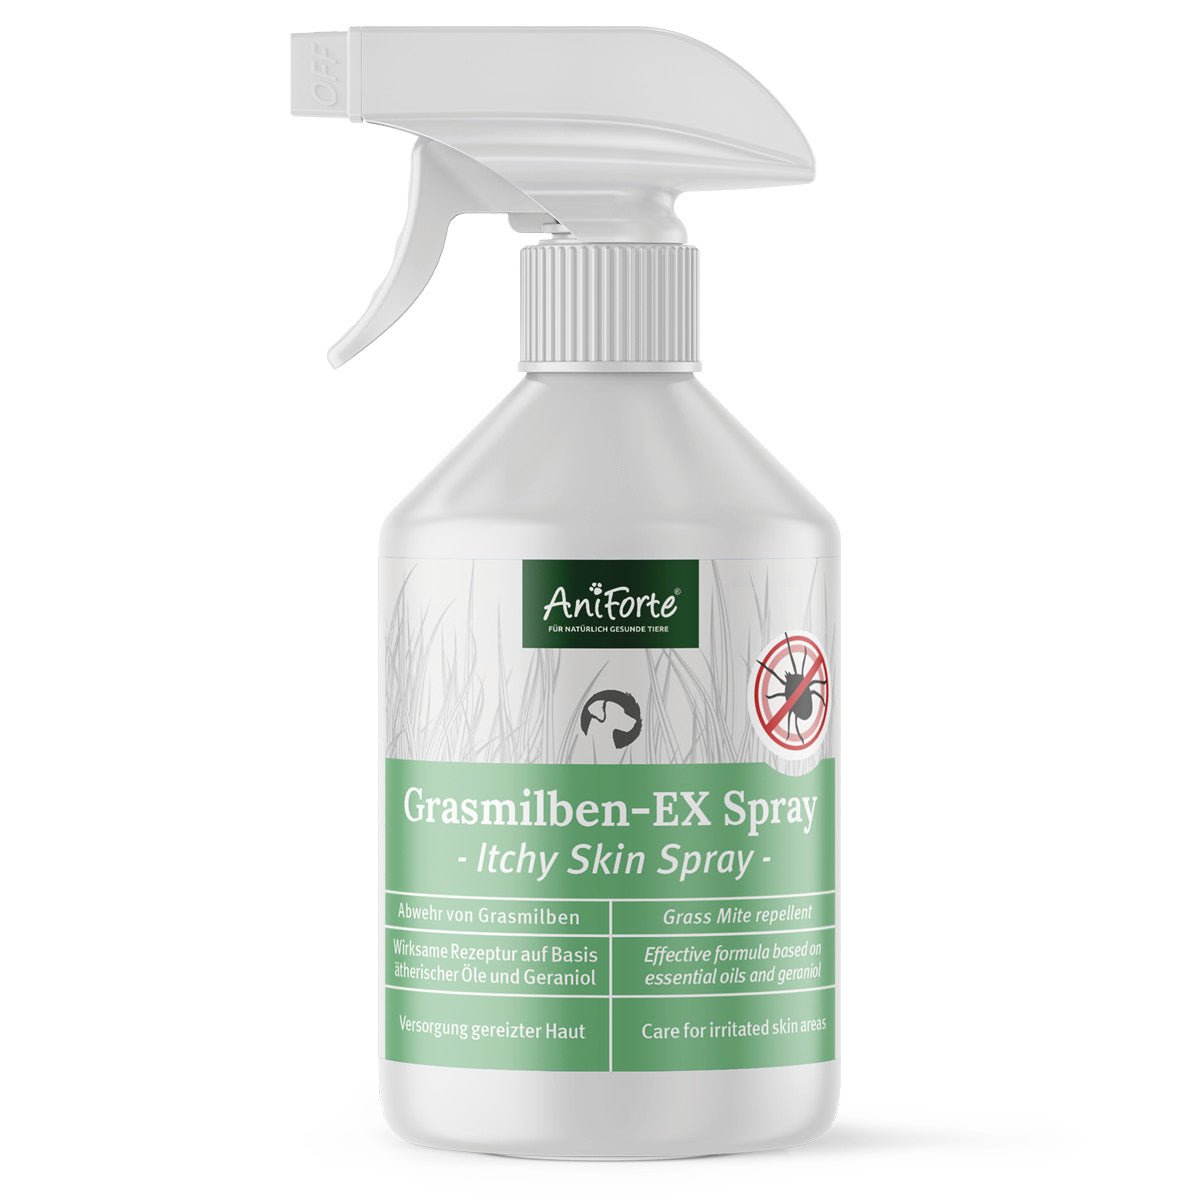 Grasmilben-EX Spray - AniForte